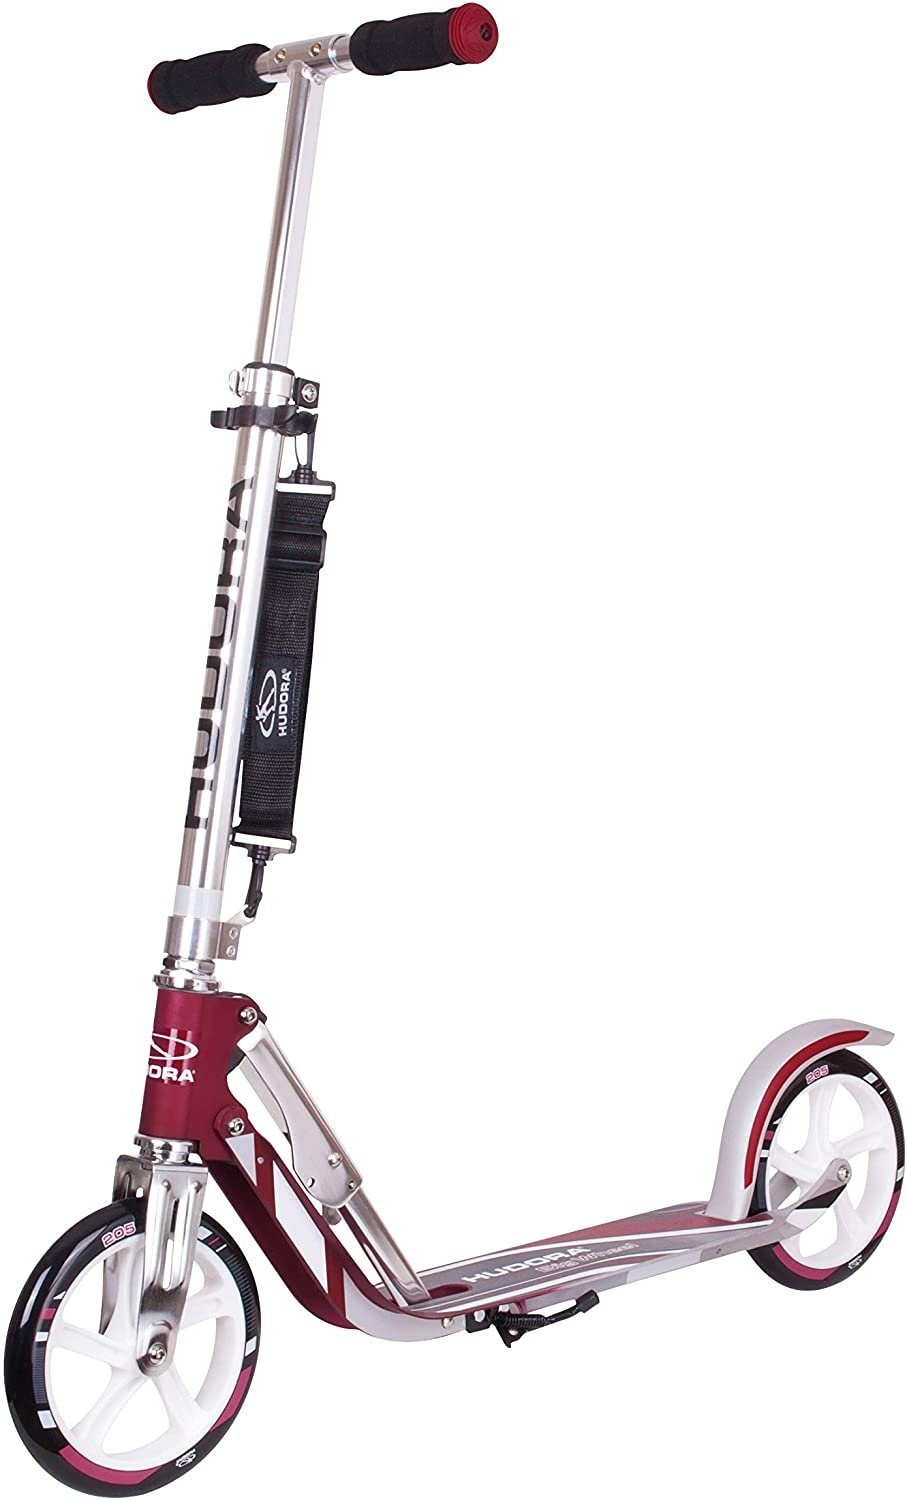 Hudora Tretroller BigWheel 205 silber Roller Scooter / RX Tretroller Cityroller Pro Technologie magenta